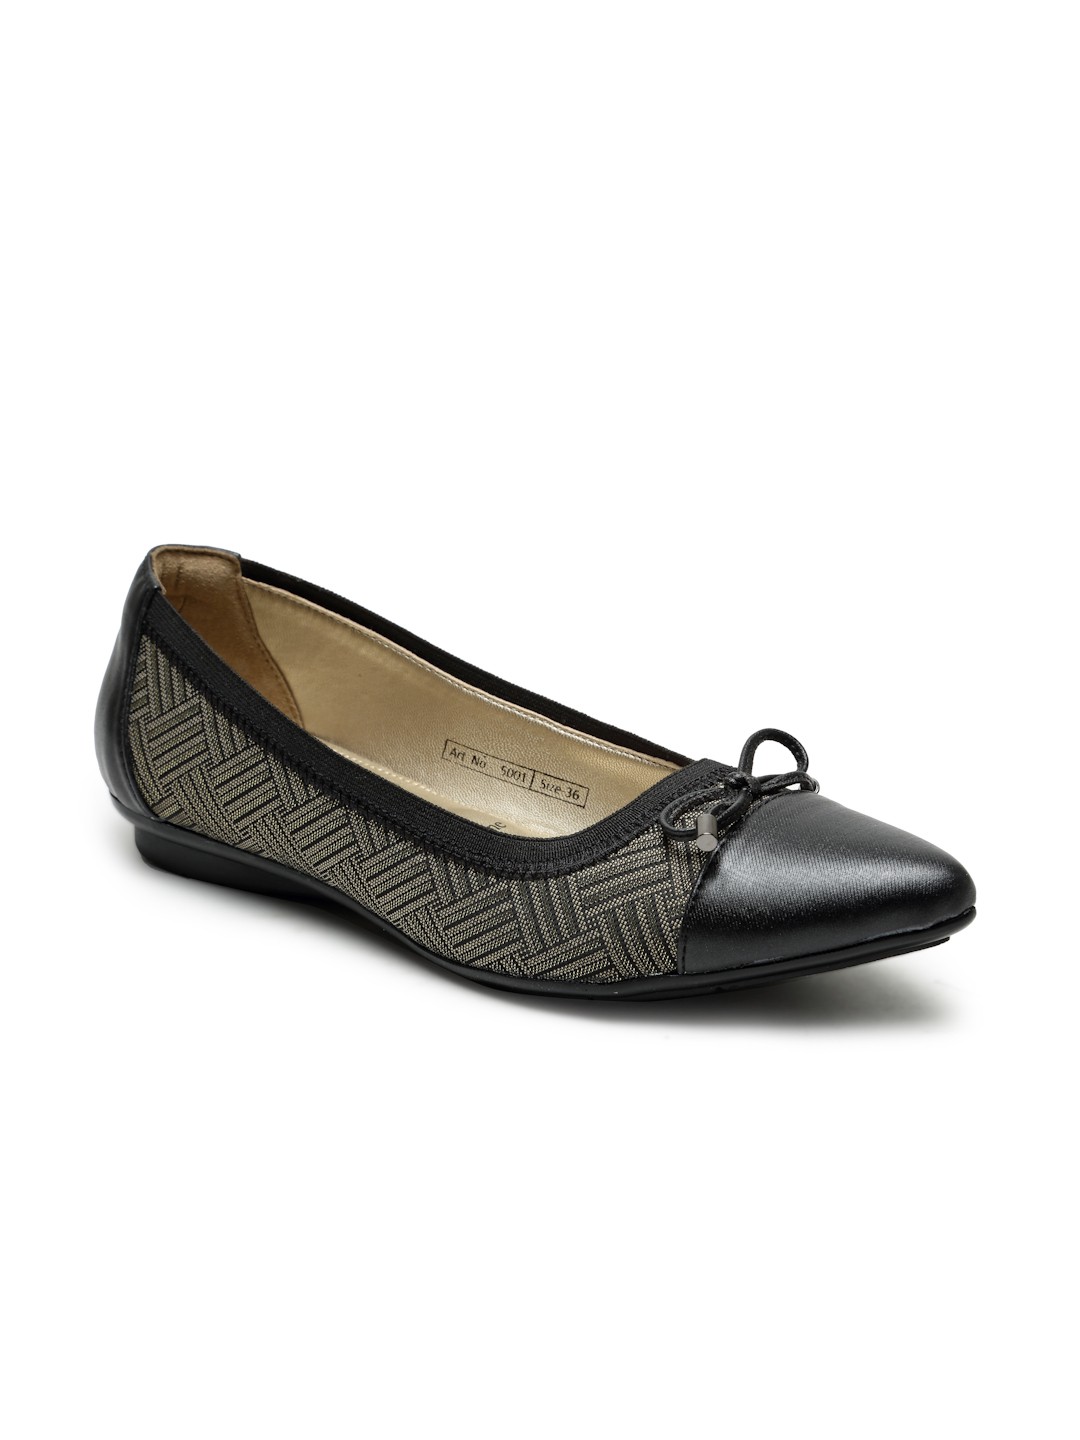 Buy Von Wellx Germany Comfort Women's Black Casual Shoes Lisa Online in Karnataka